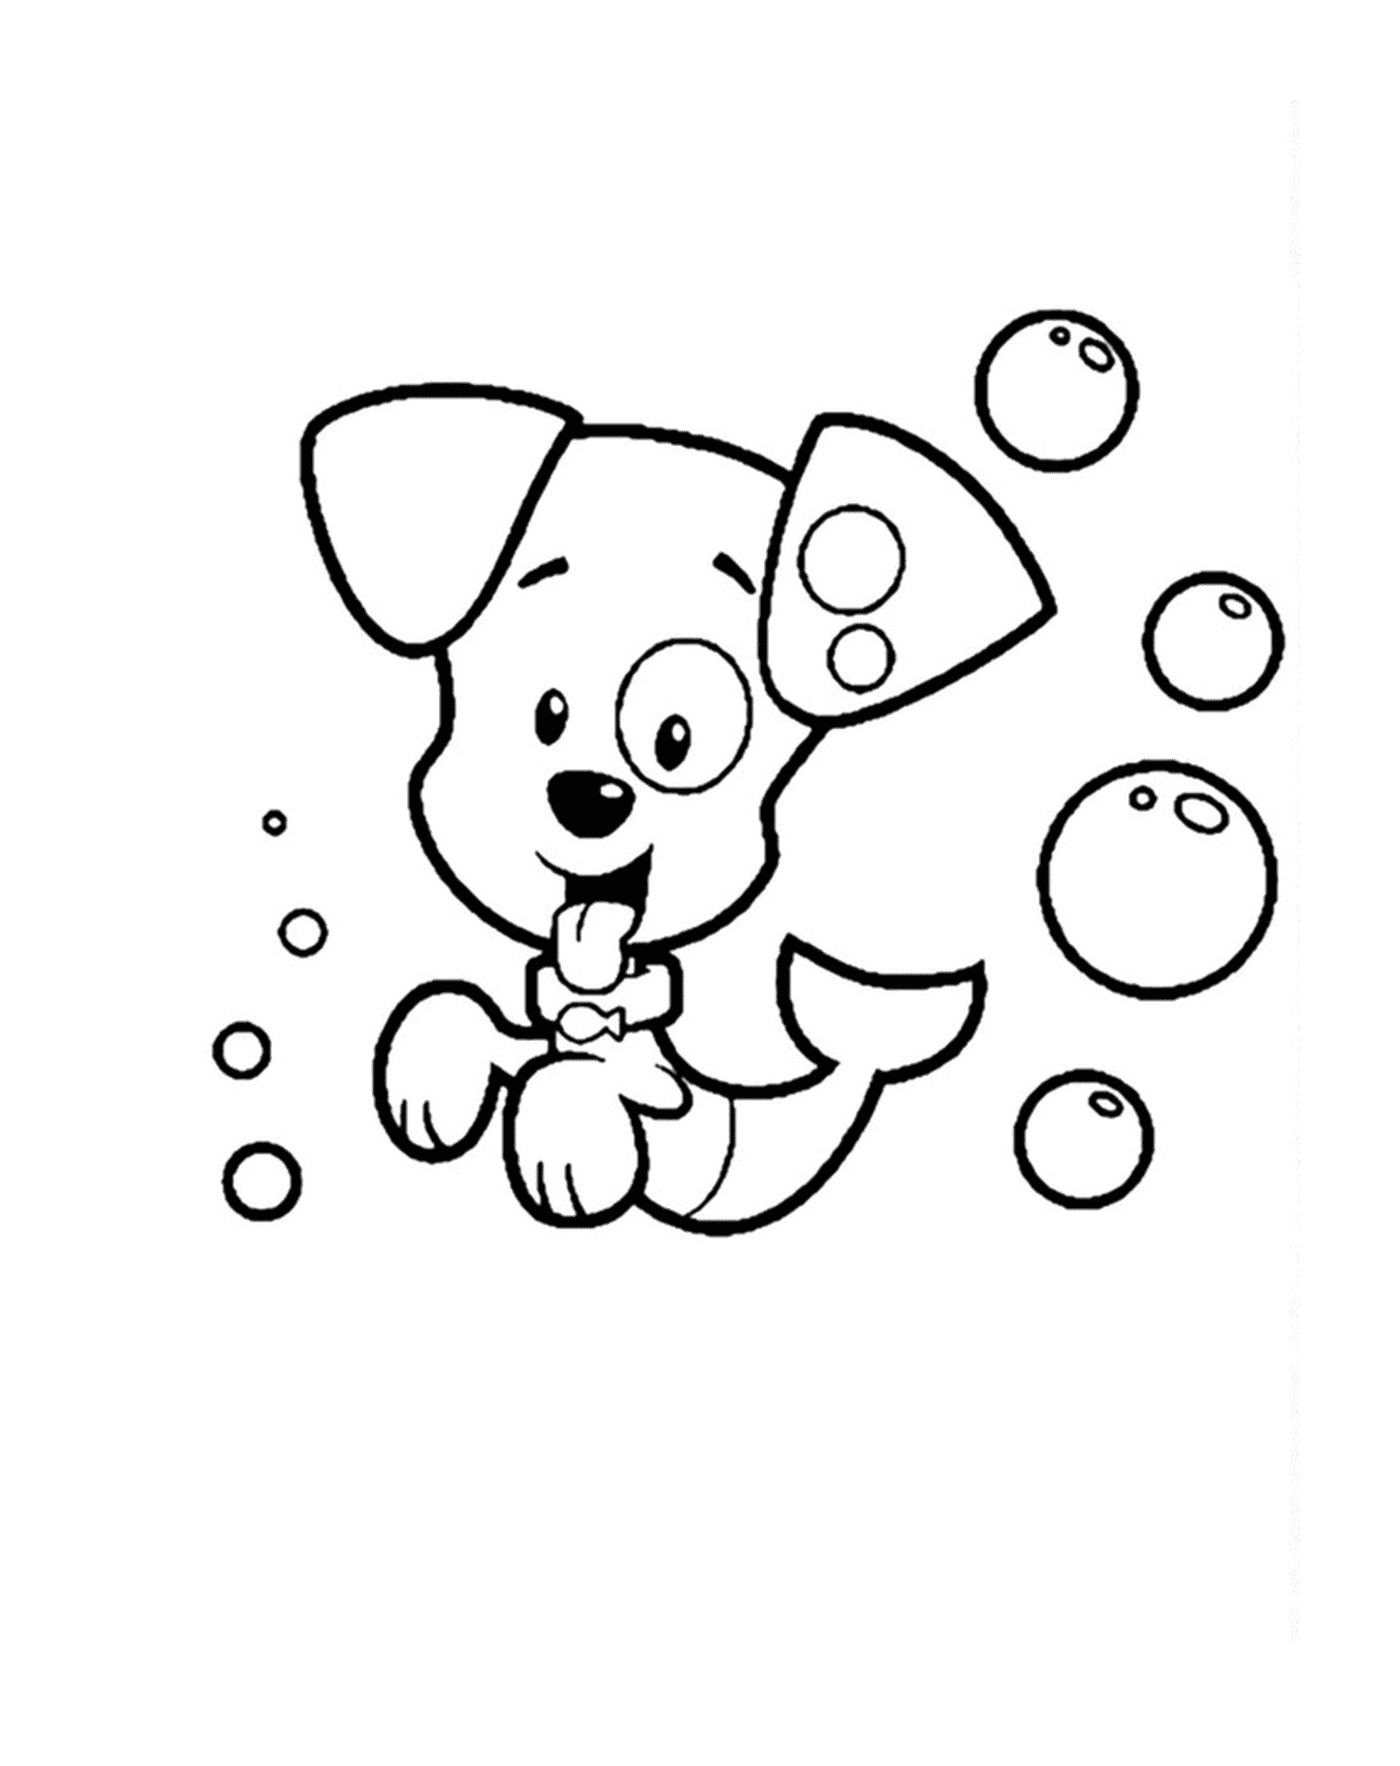  Un cane circondato da bolle 